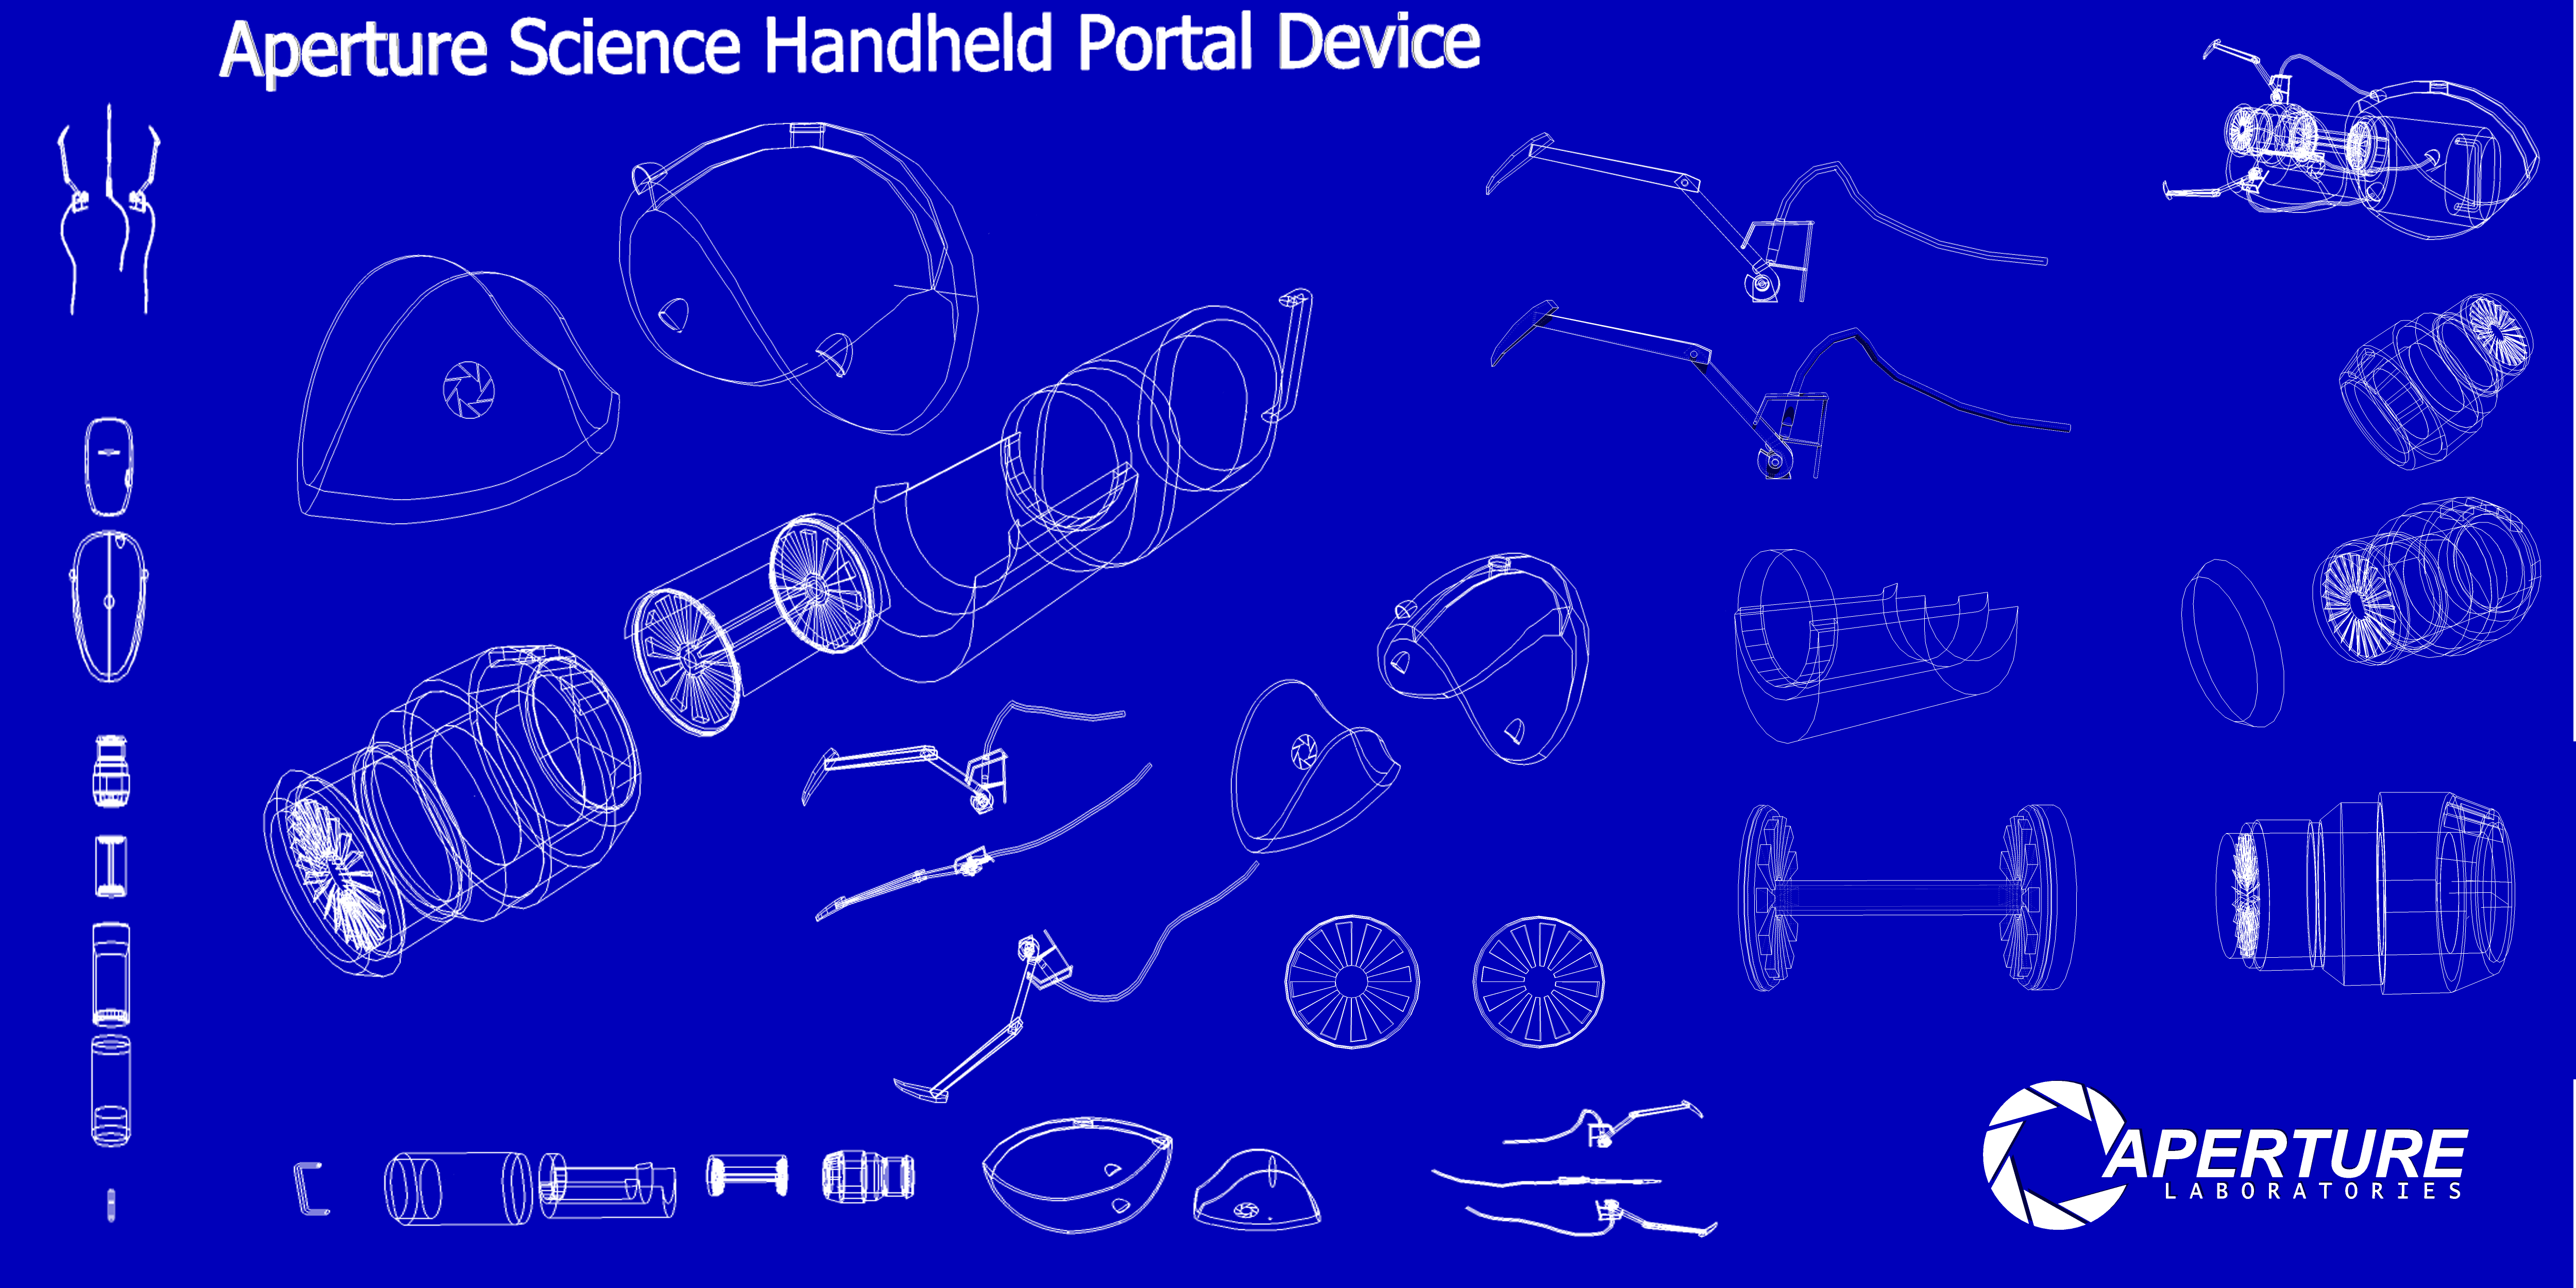 Aperture science handheld portal device blueprint by VitruvianCorpLabs